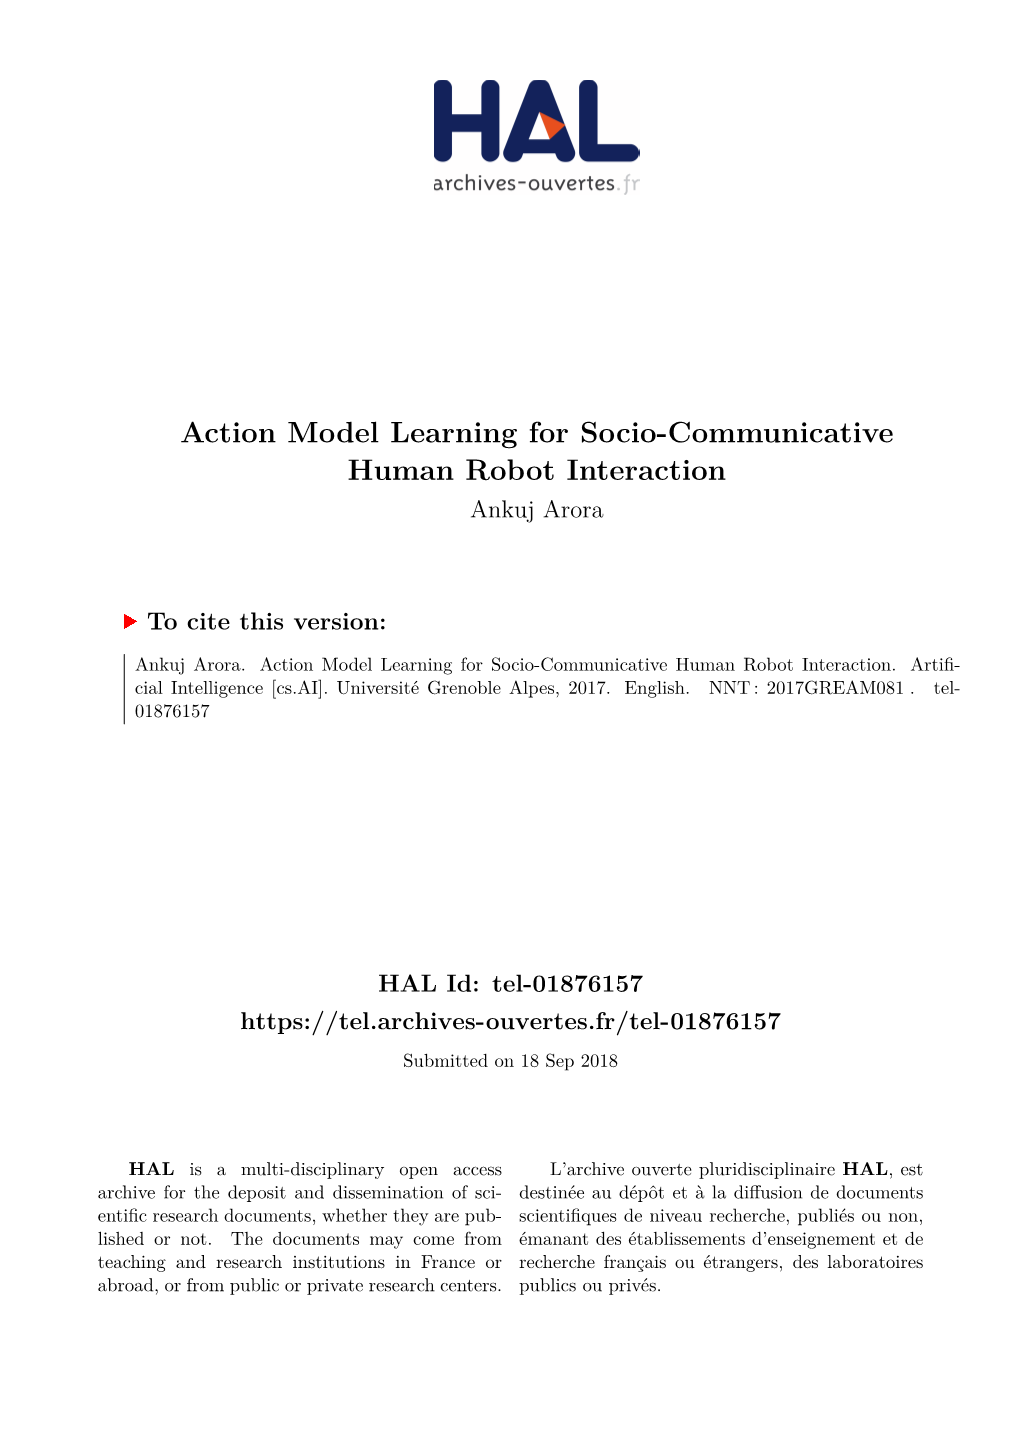 Action Model Learning for Socio-Communicative Human Robot Interaction Ankuj Arora